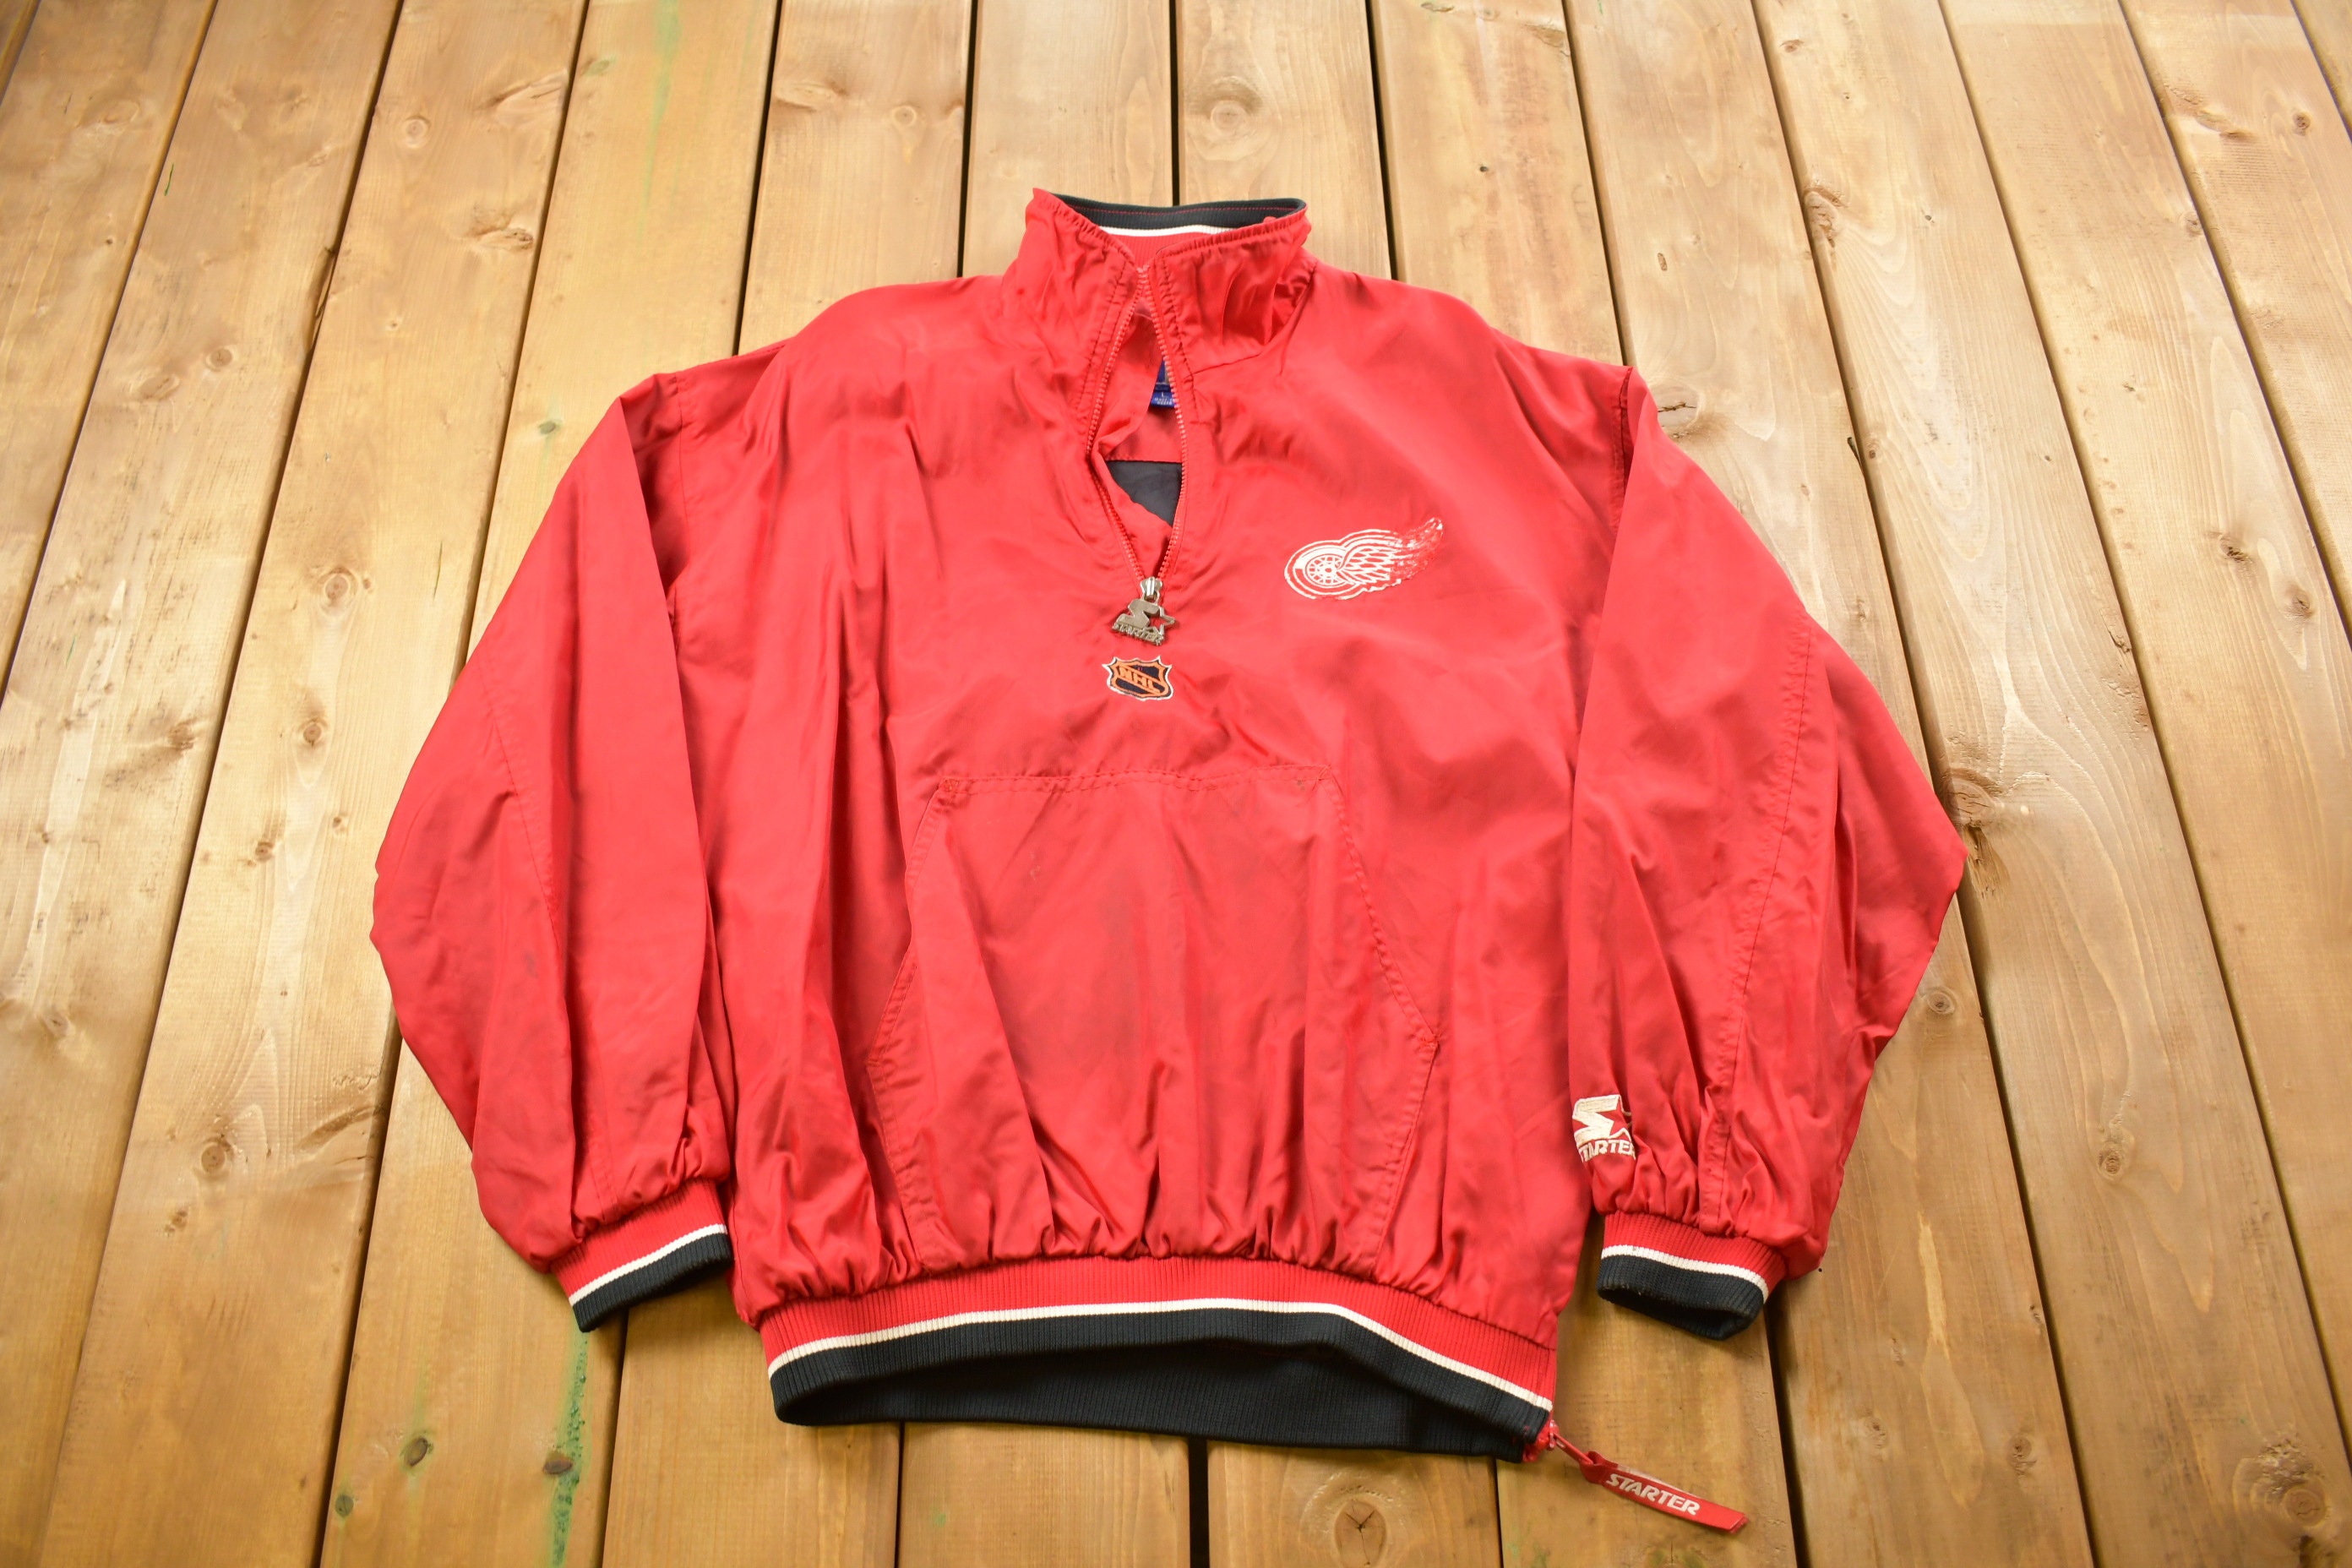 Men's JH Design Red Detroit Wings Jacket